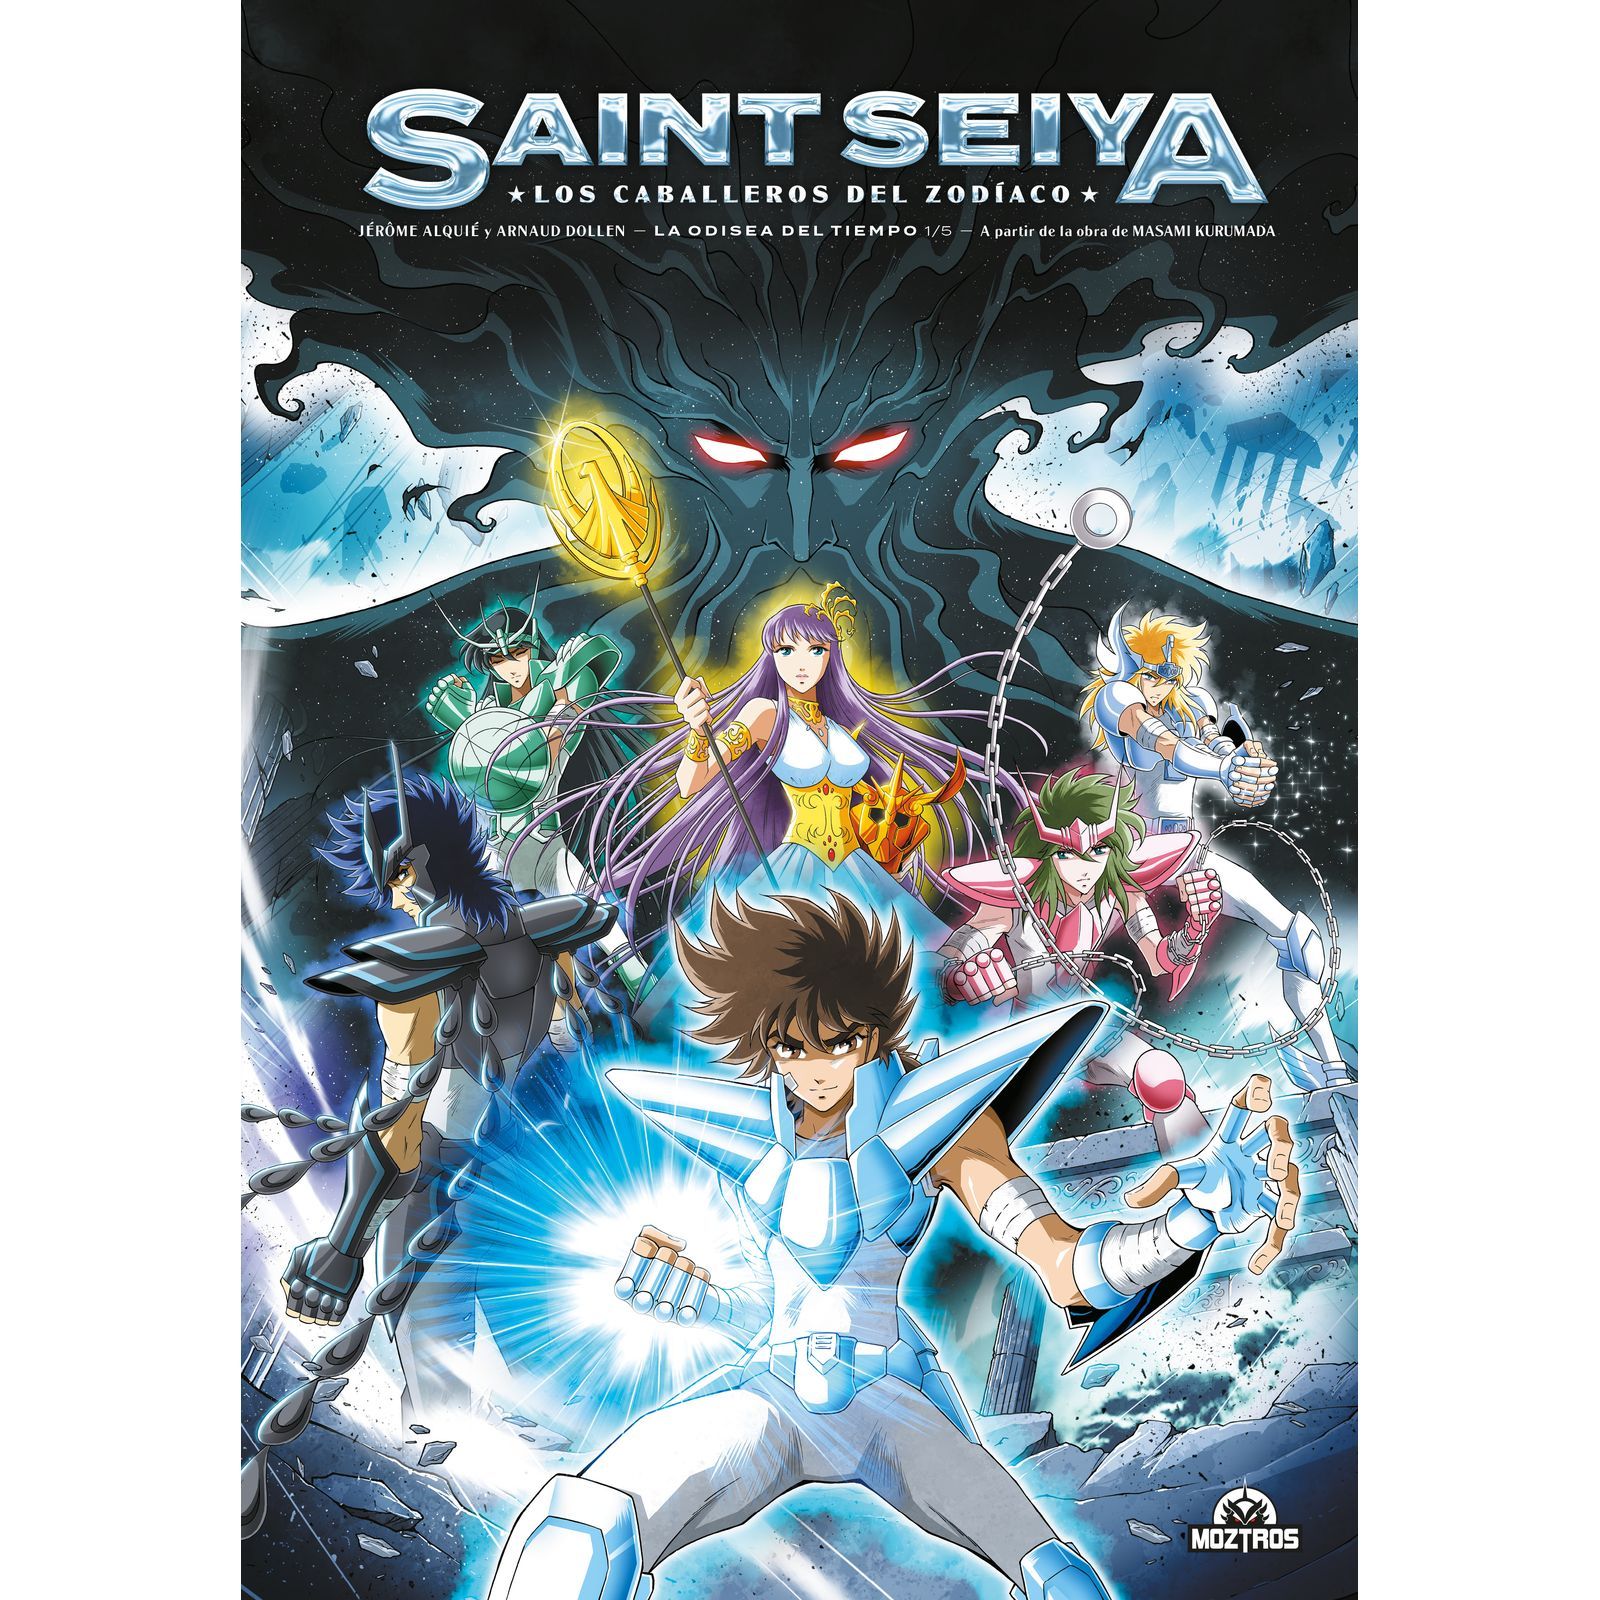 Saint Seiya La Odisea del Tiempo Volumen 1 Audio en En Español Latino 4K 